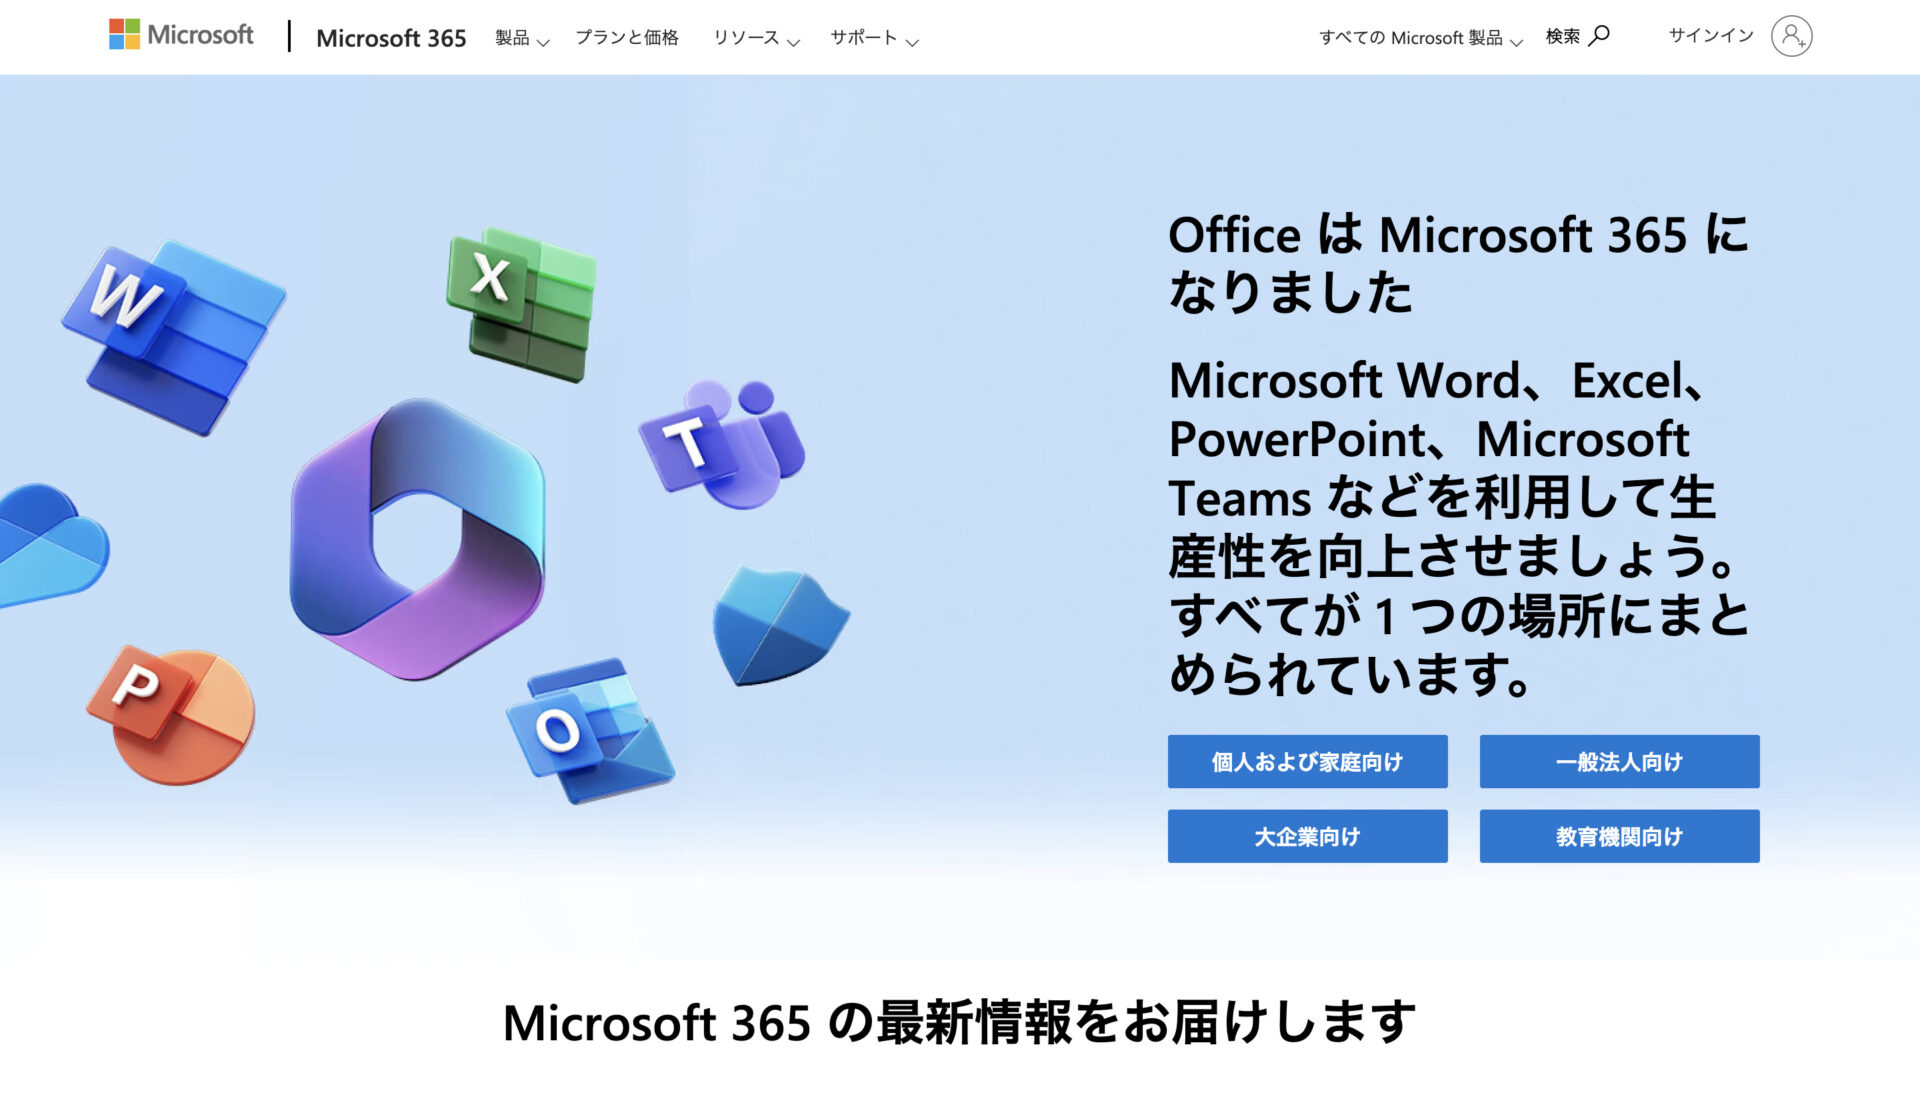 Microsoft 365のトップ画像